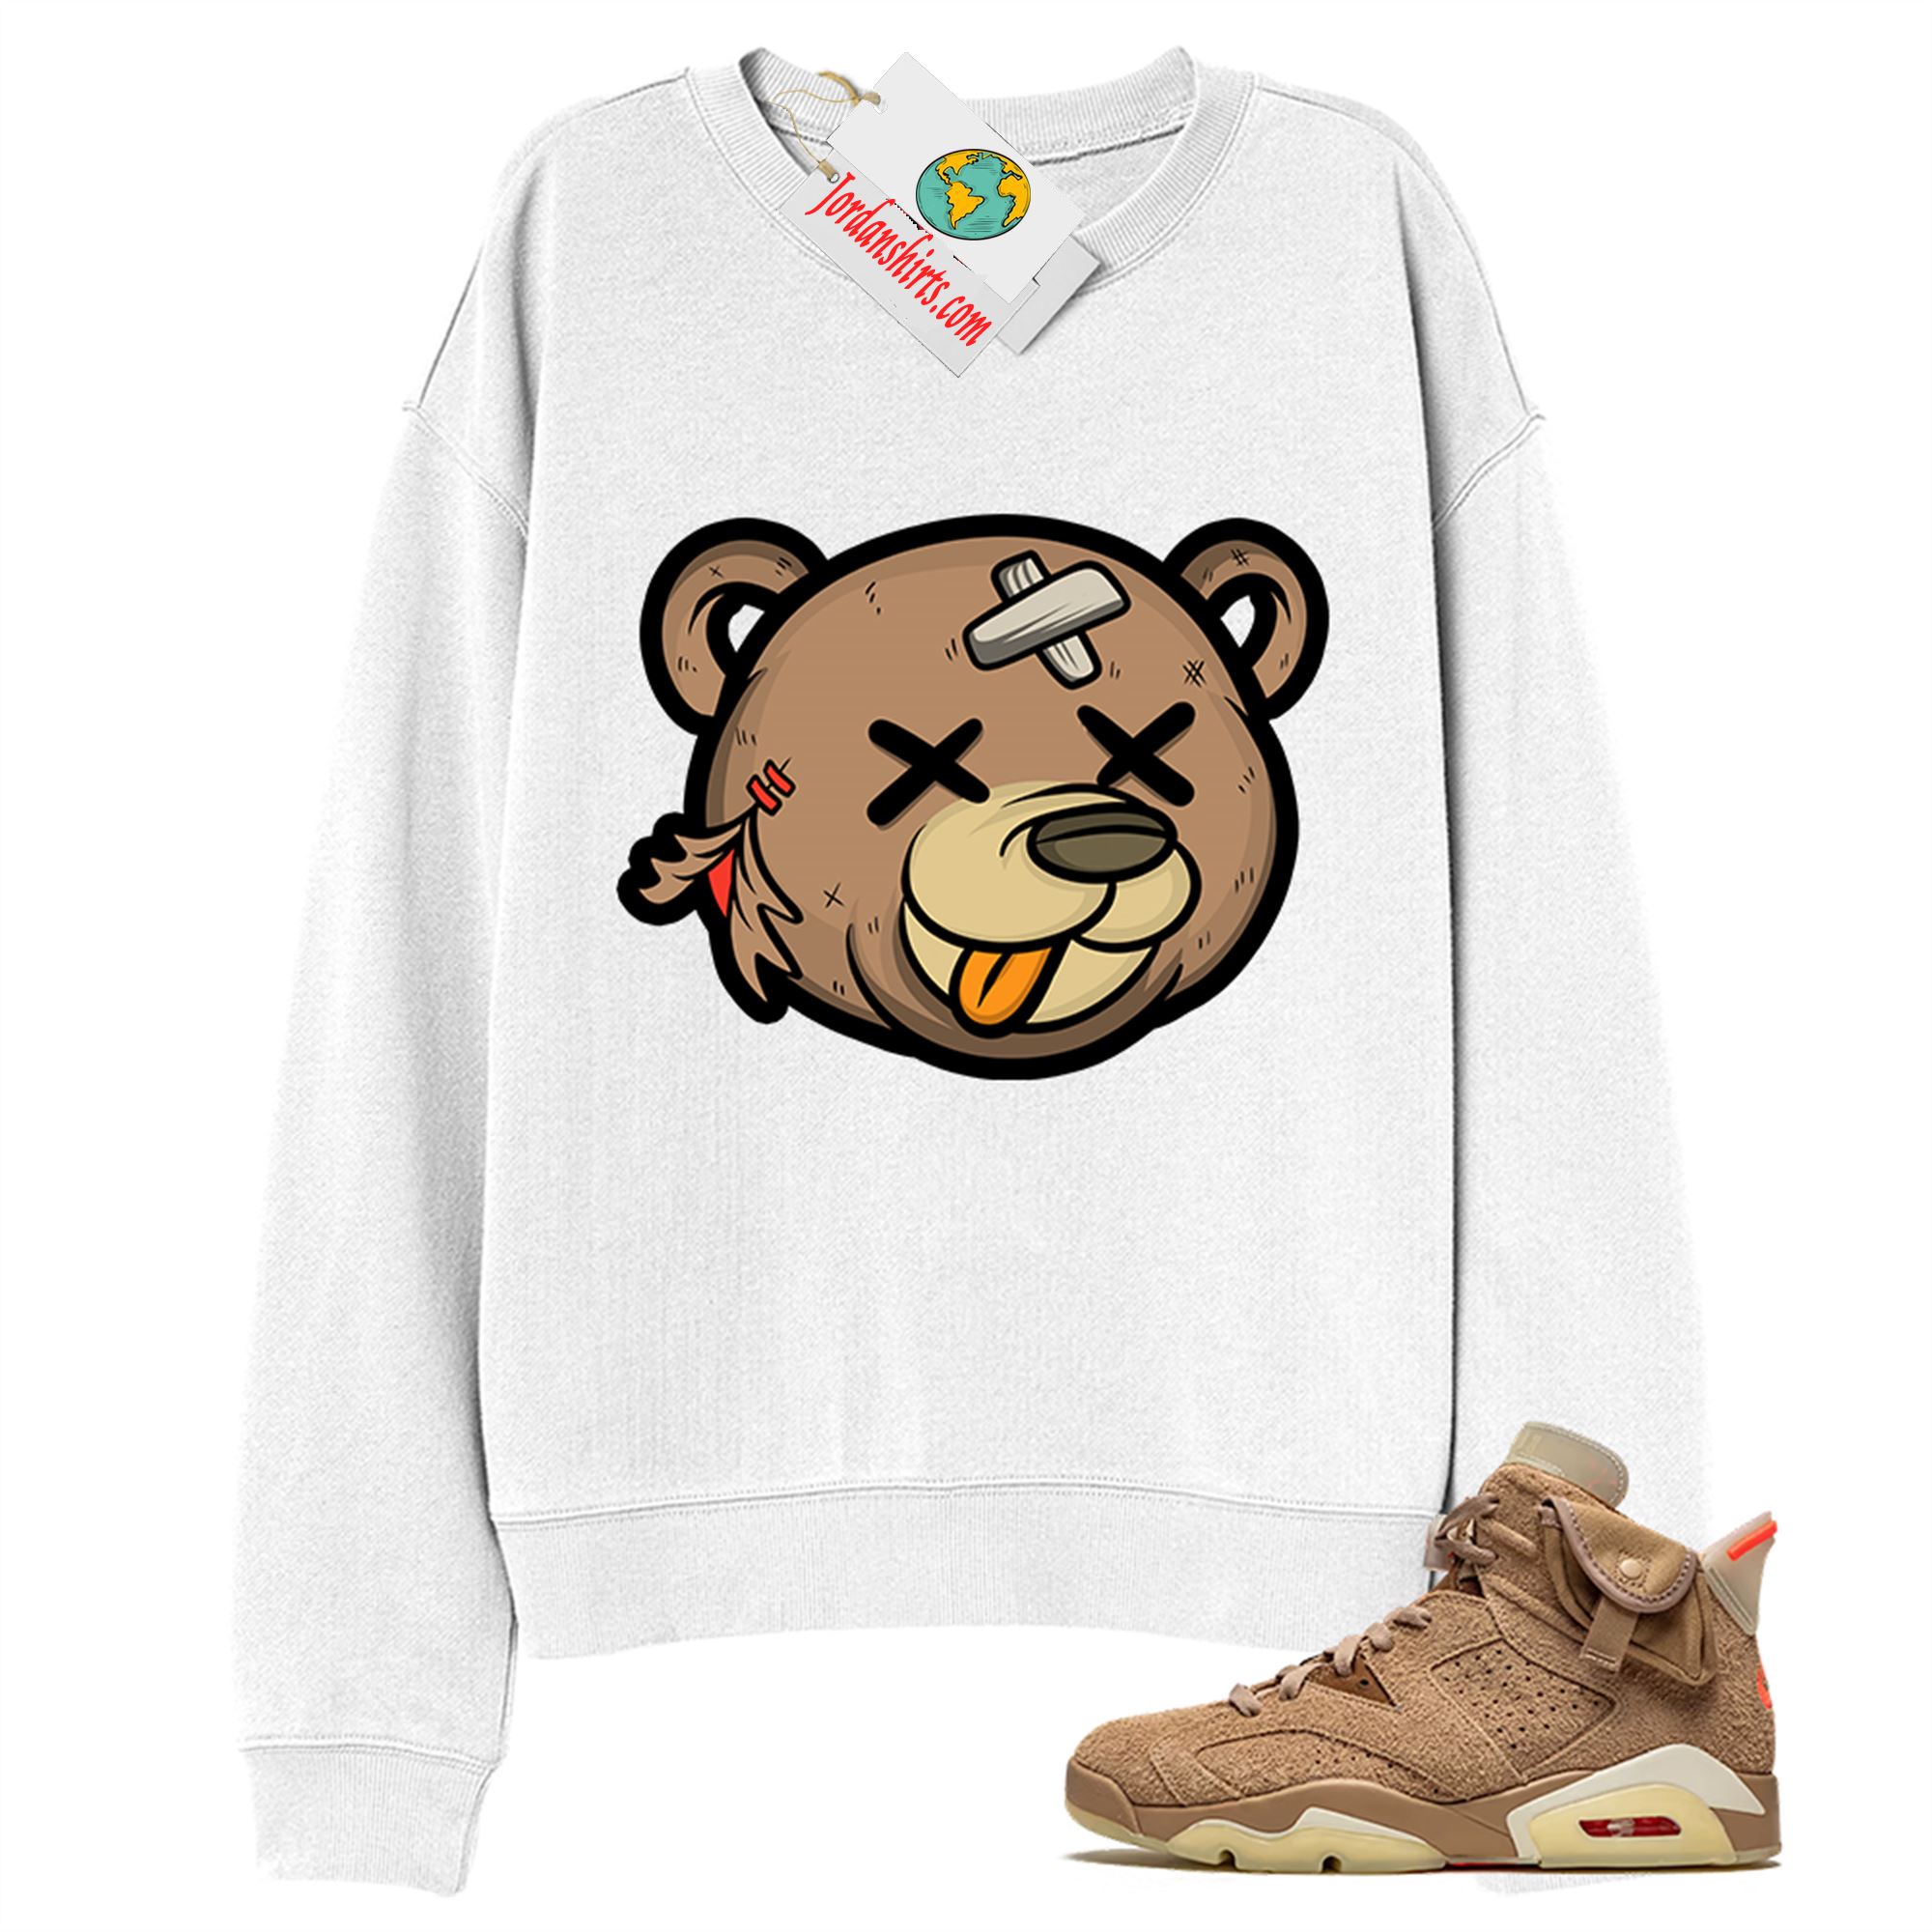 Jordan 6 Sweatshirt, Teddy Bear Head White Sweatshirt Air Jordan 6 Travis Scott 6s Plus Size Up To 5xl